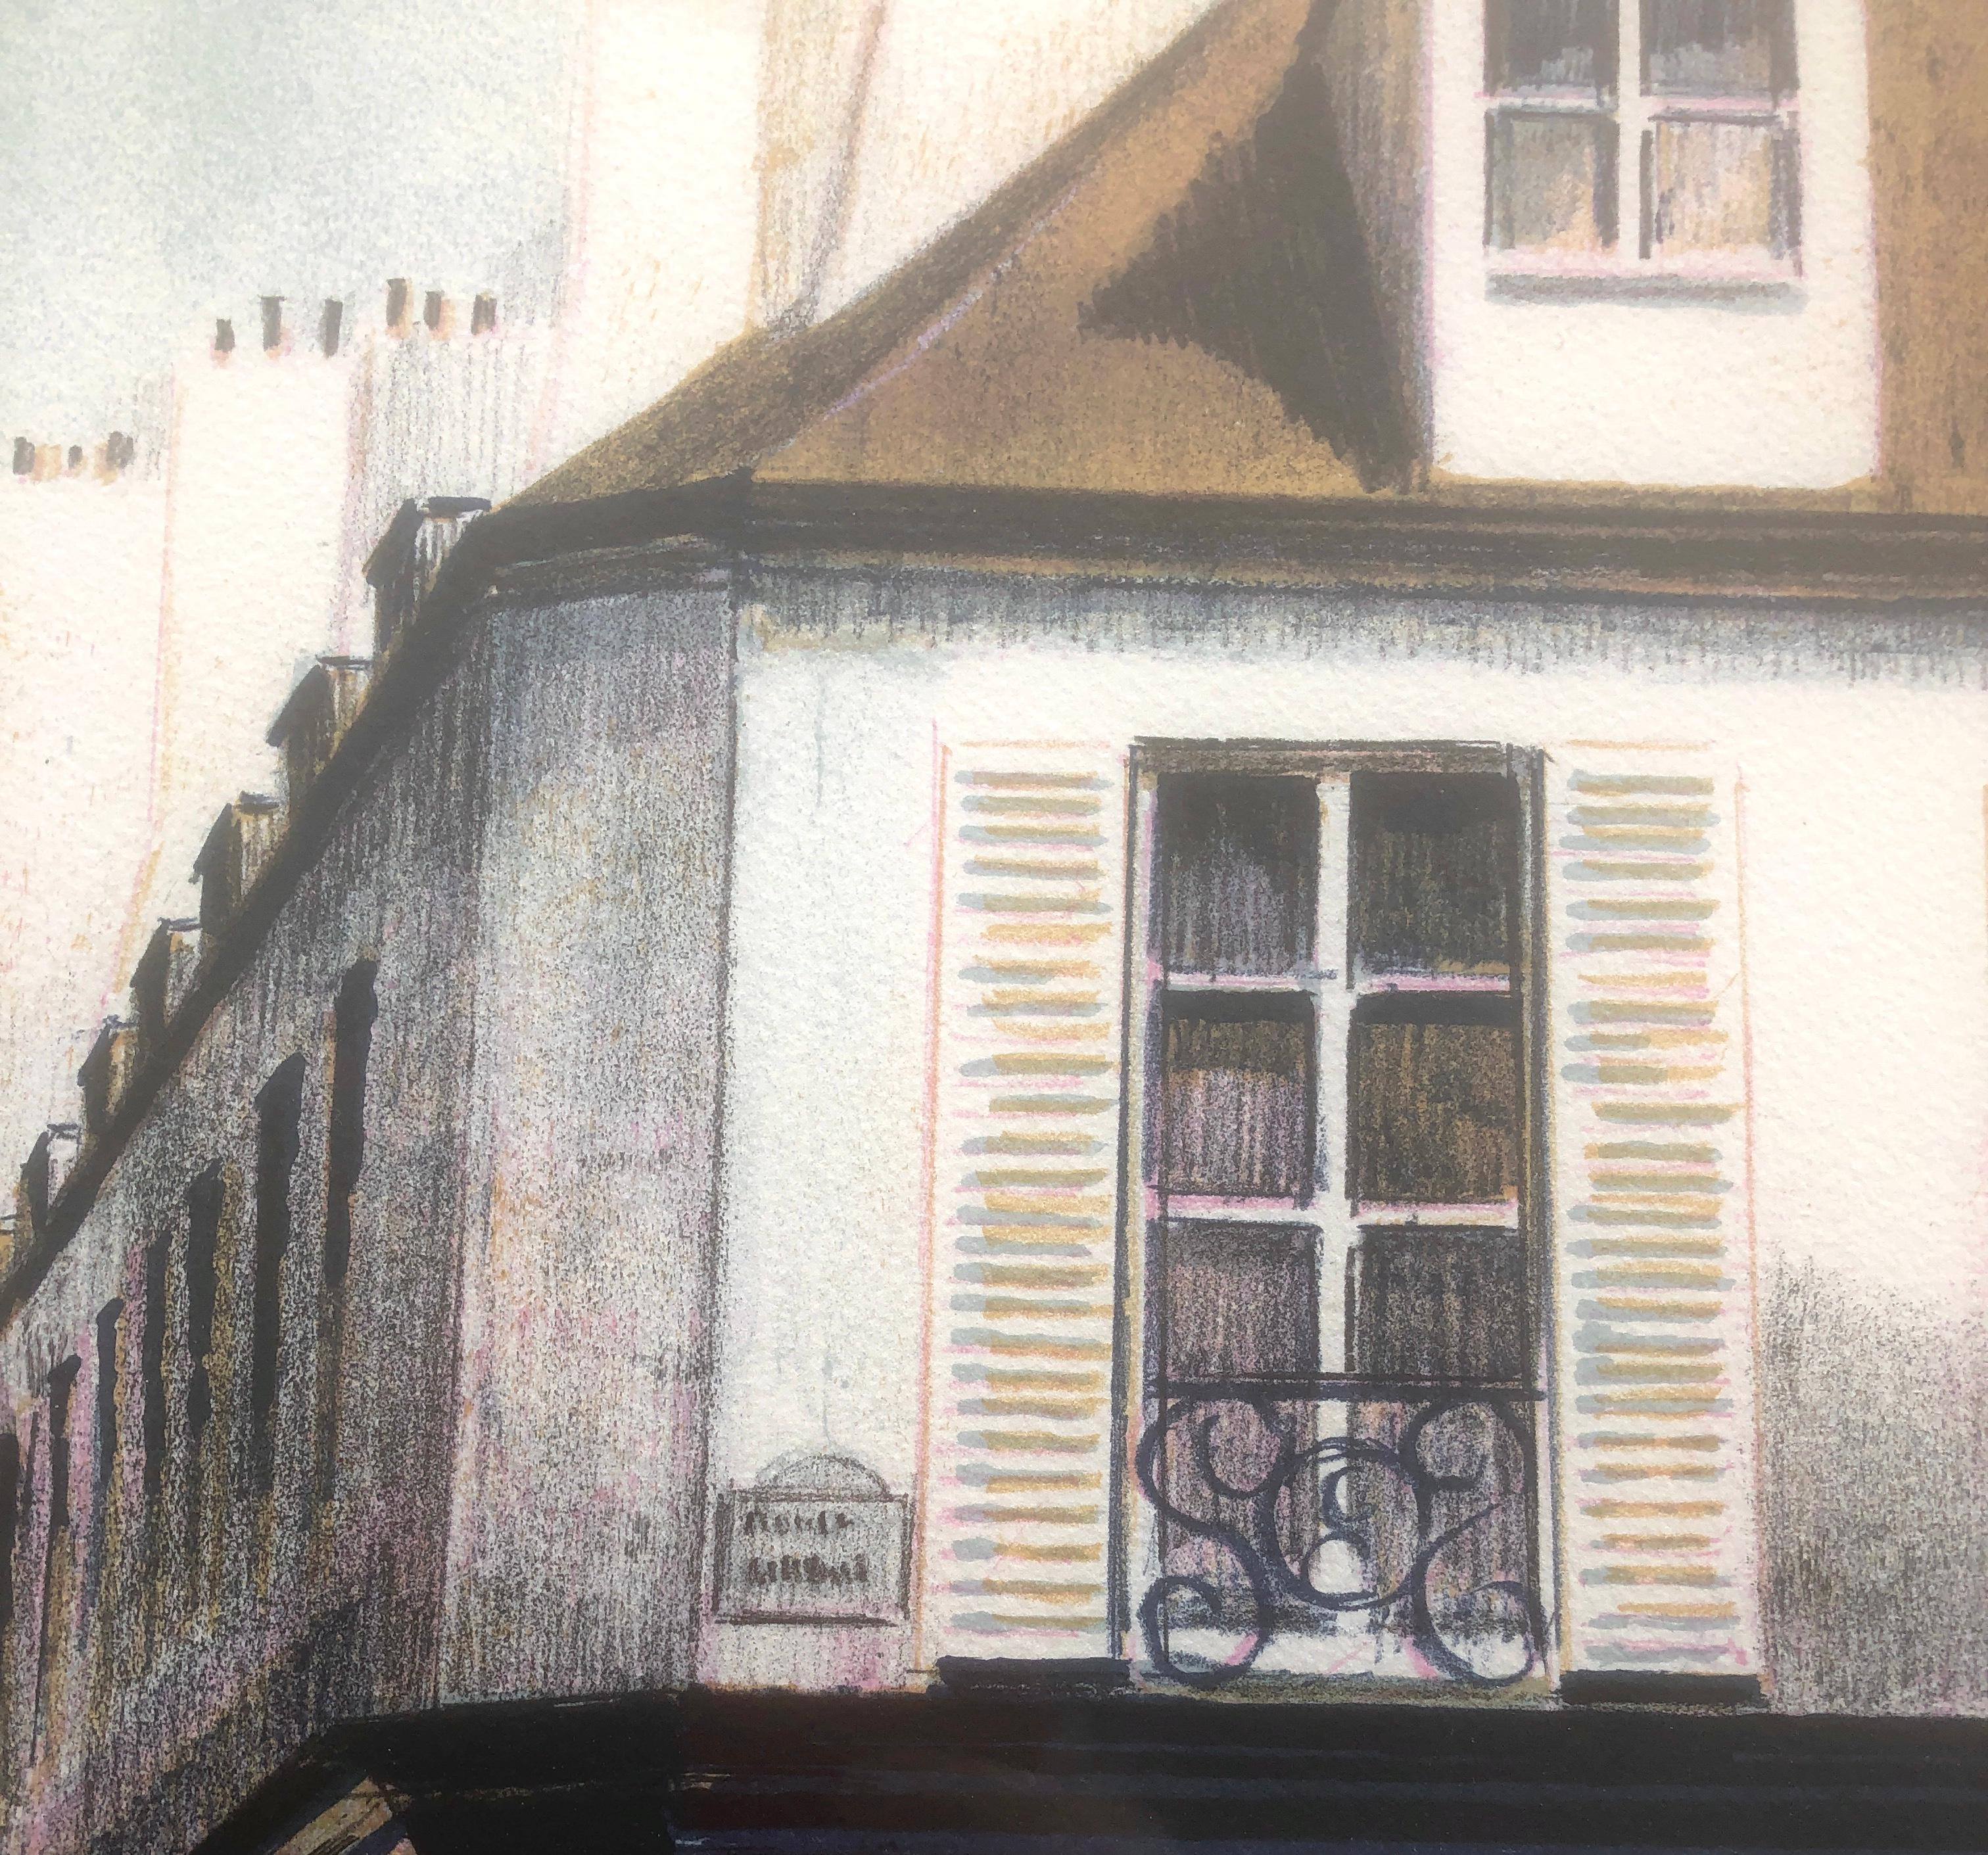 Paris France lithograph vayreda canadell urbanscape For Sale 2